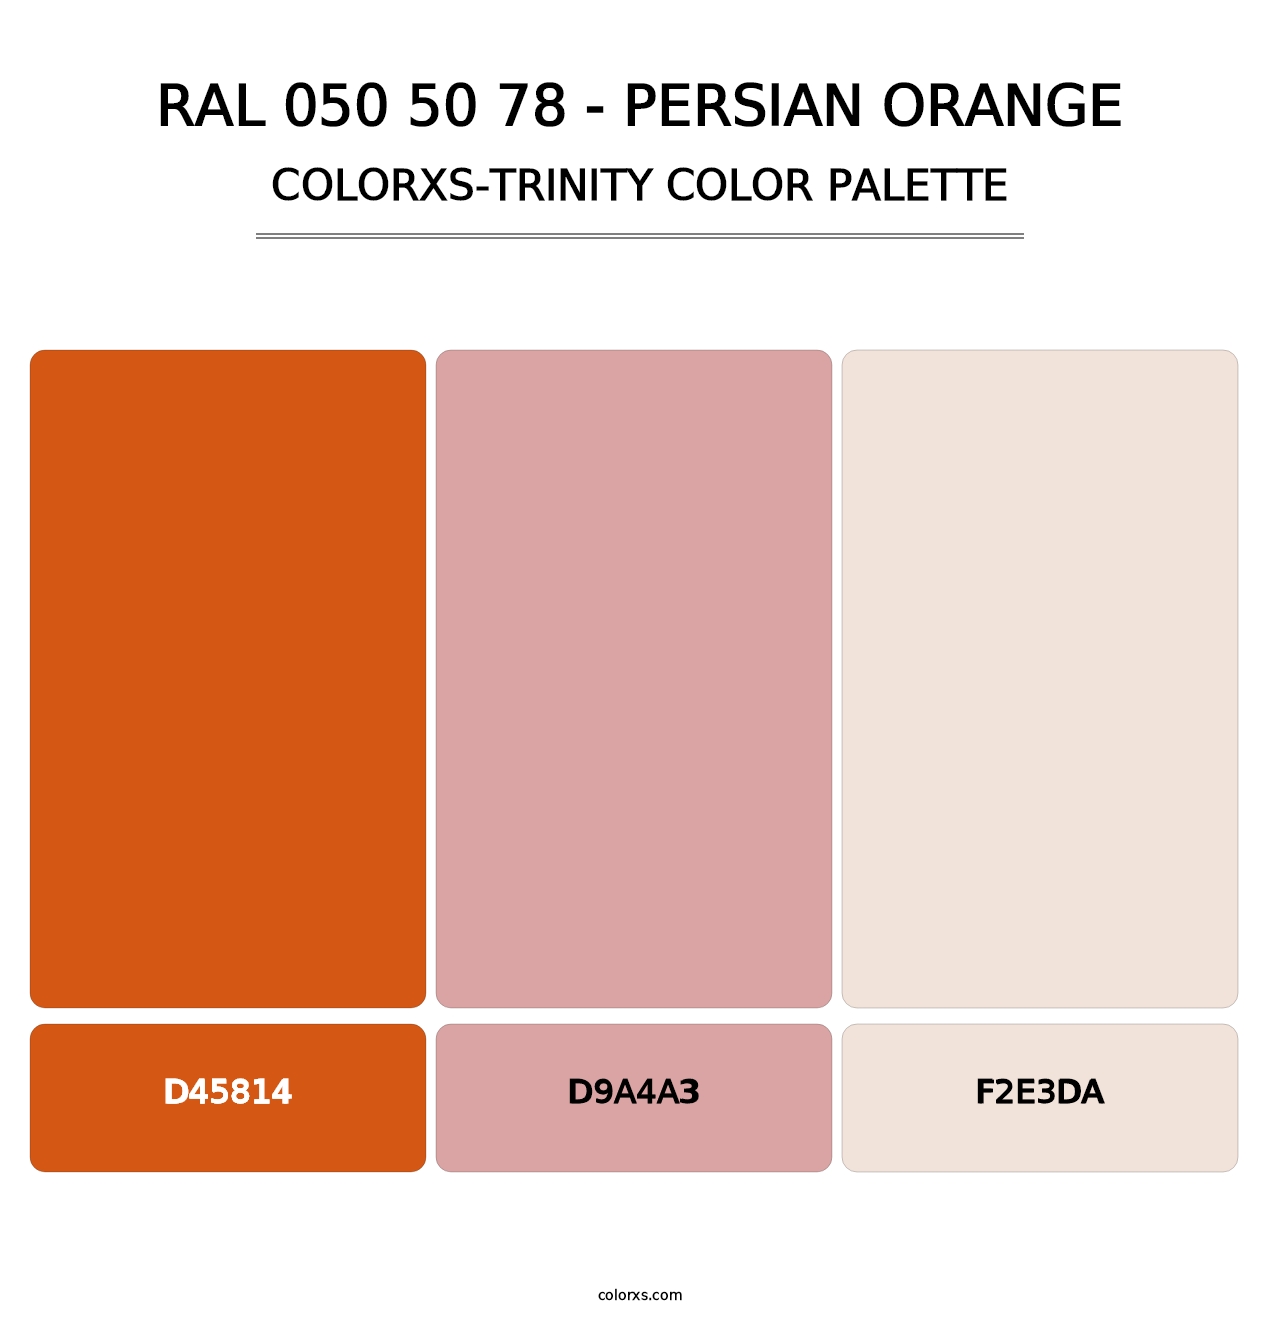 RAL 050 50 78 - Persian Orange - Colorxs Trinity Palette